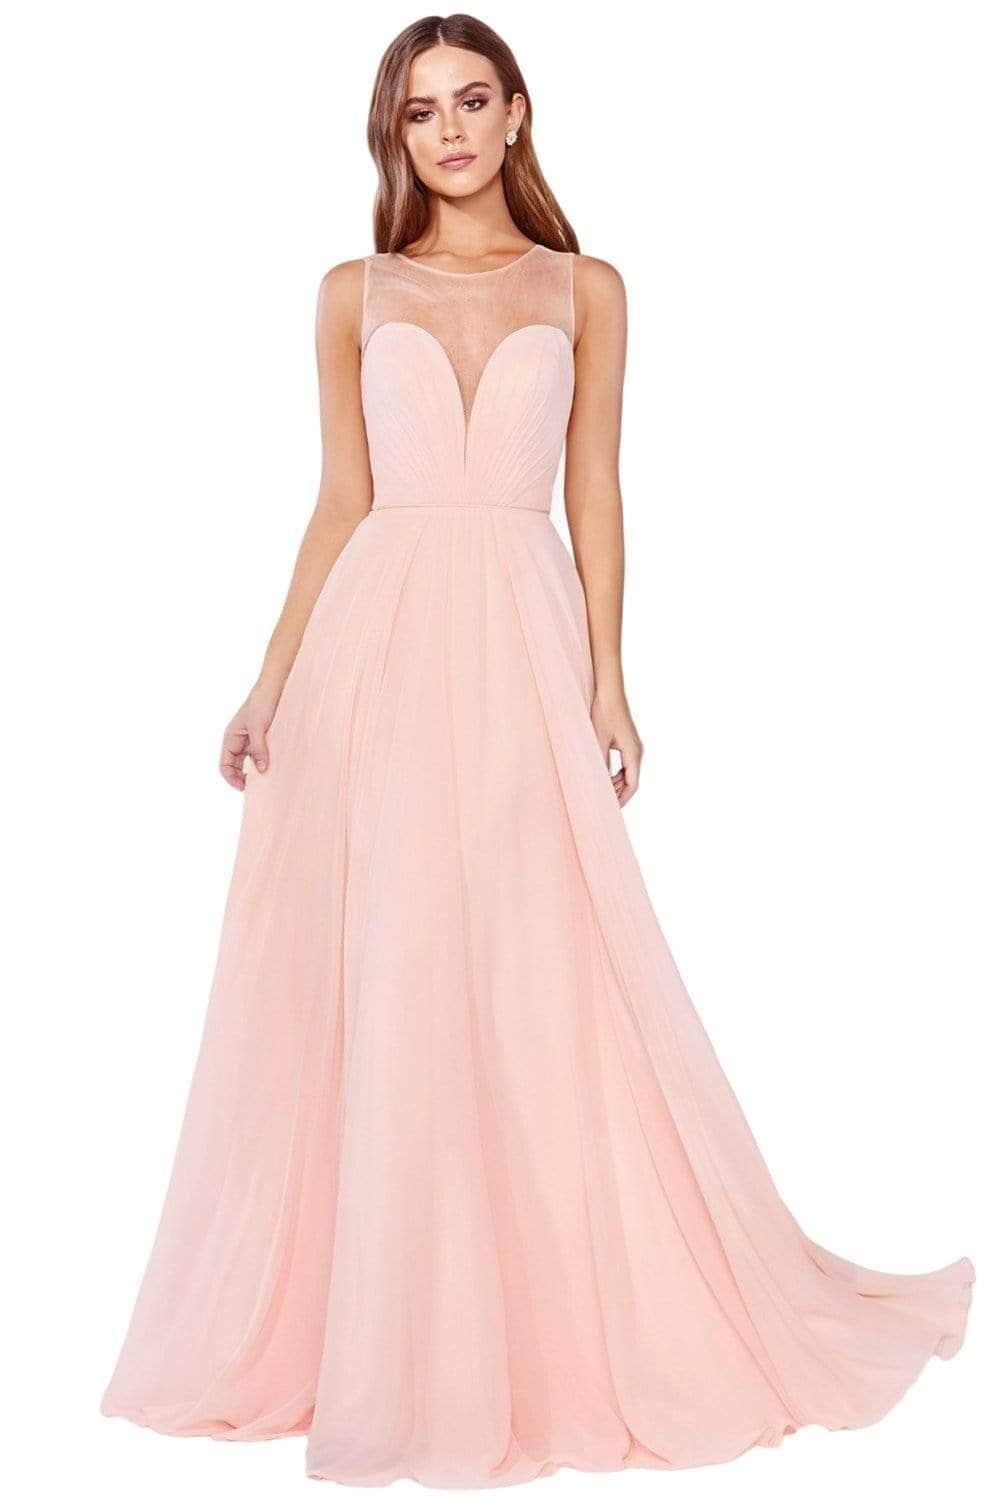 Ladivine CJ251 - Illusion Jewel A-Line Evening Gown Evening Dresses 4 